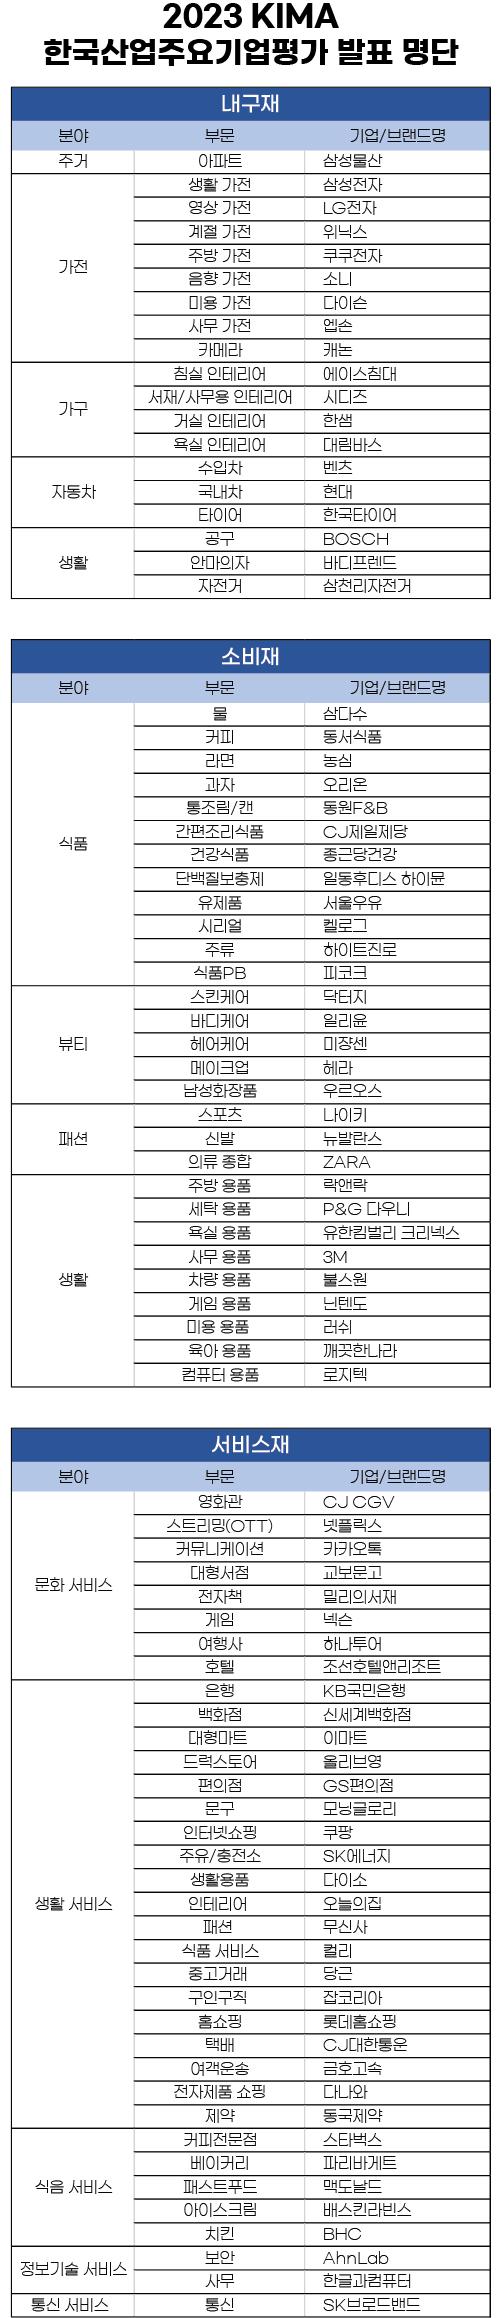 2023 KIMA 한국산업주요기업평가 발표 명단 사진KCA 한국소비자평가